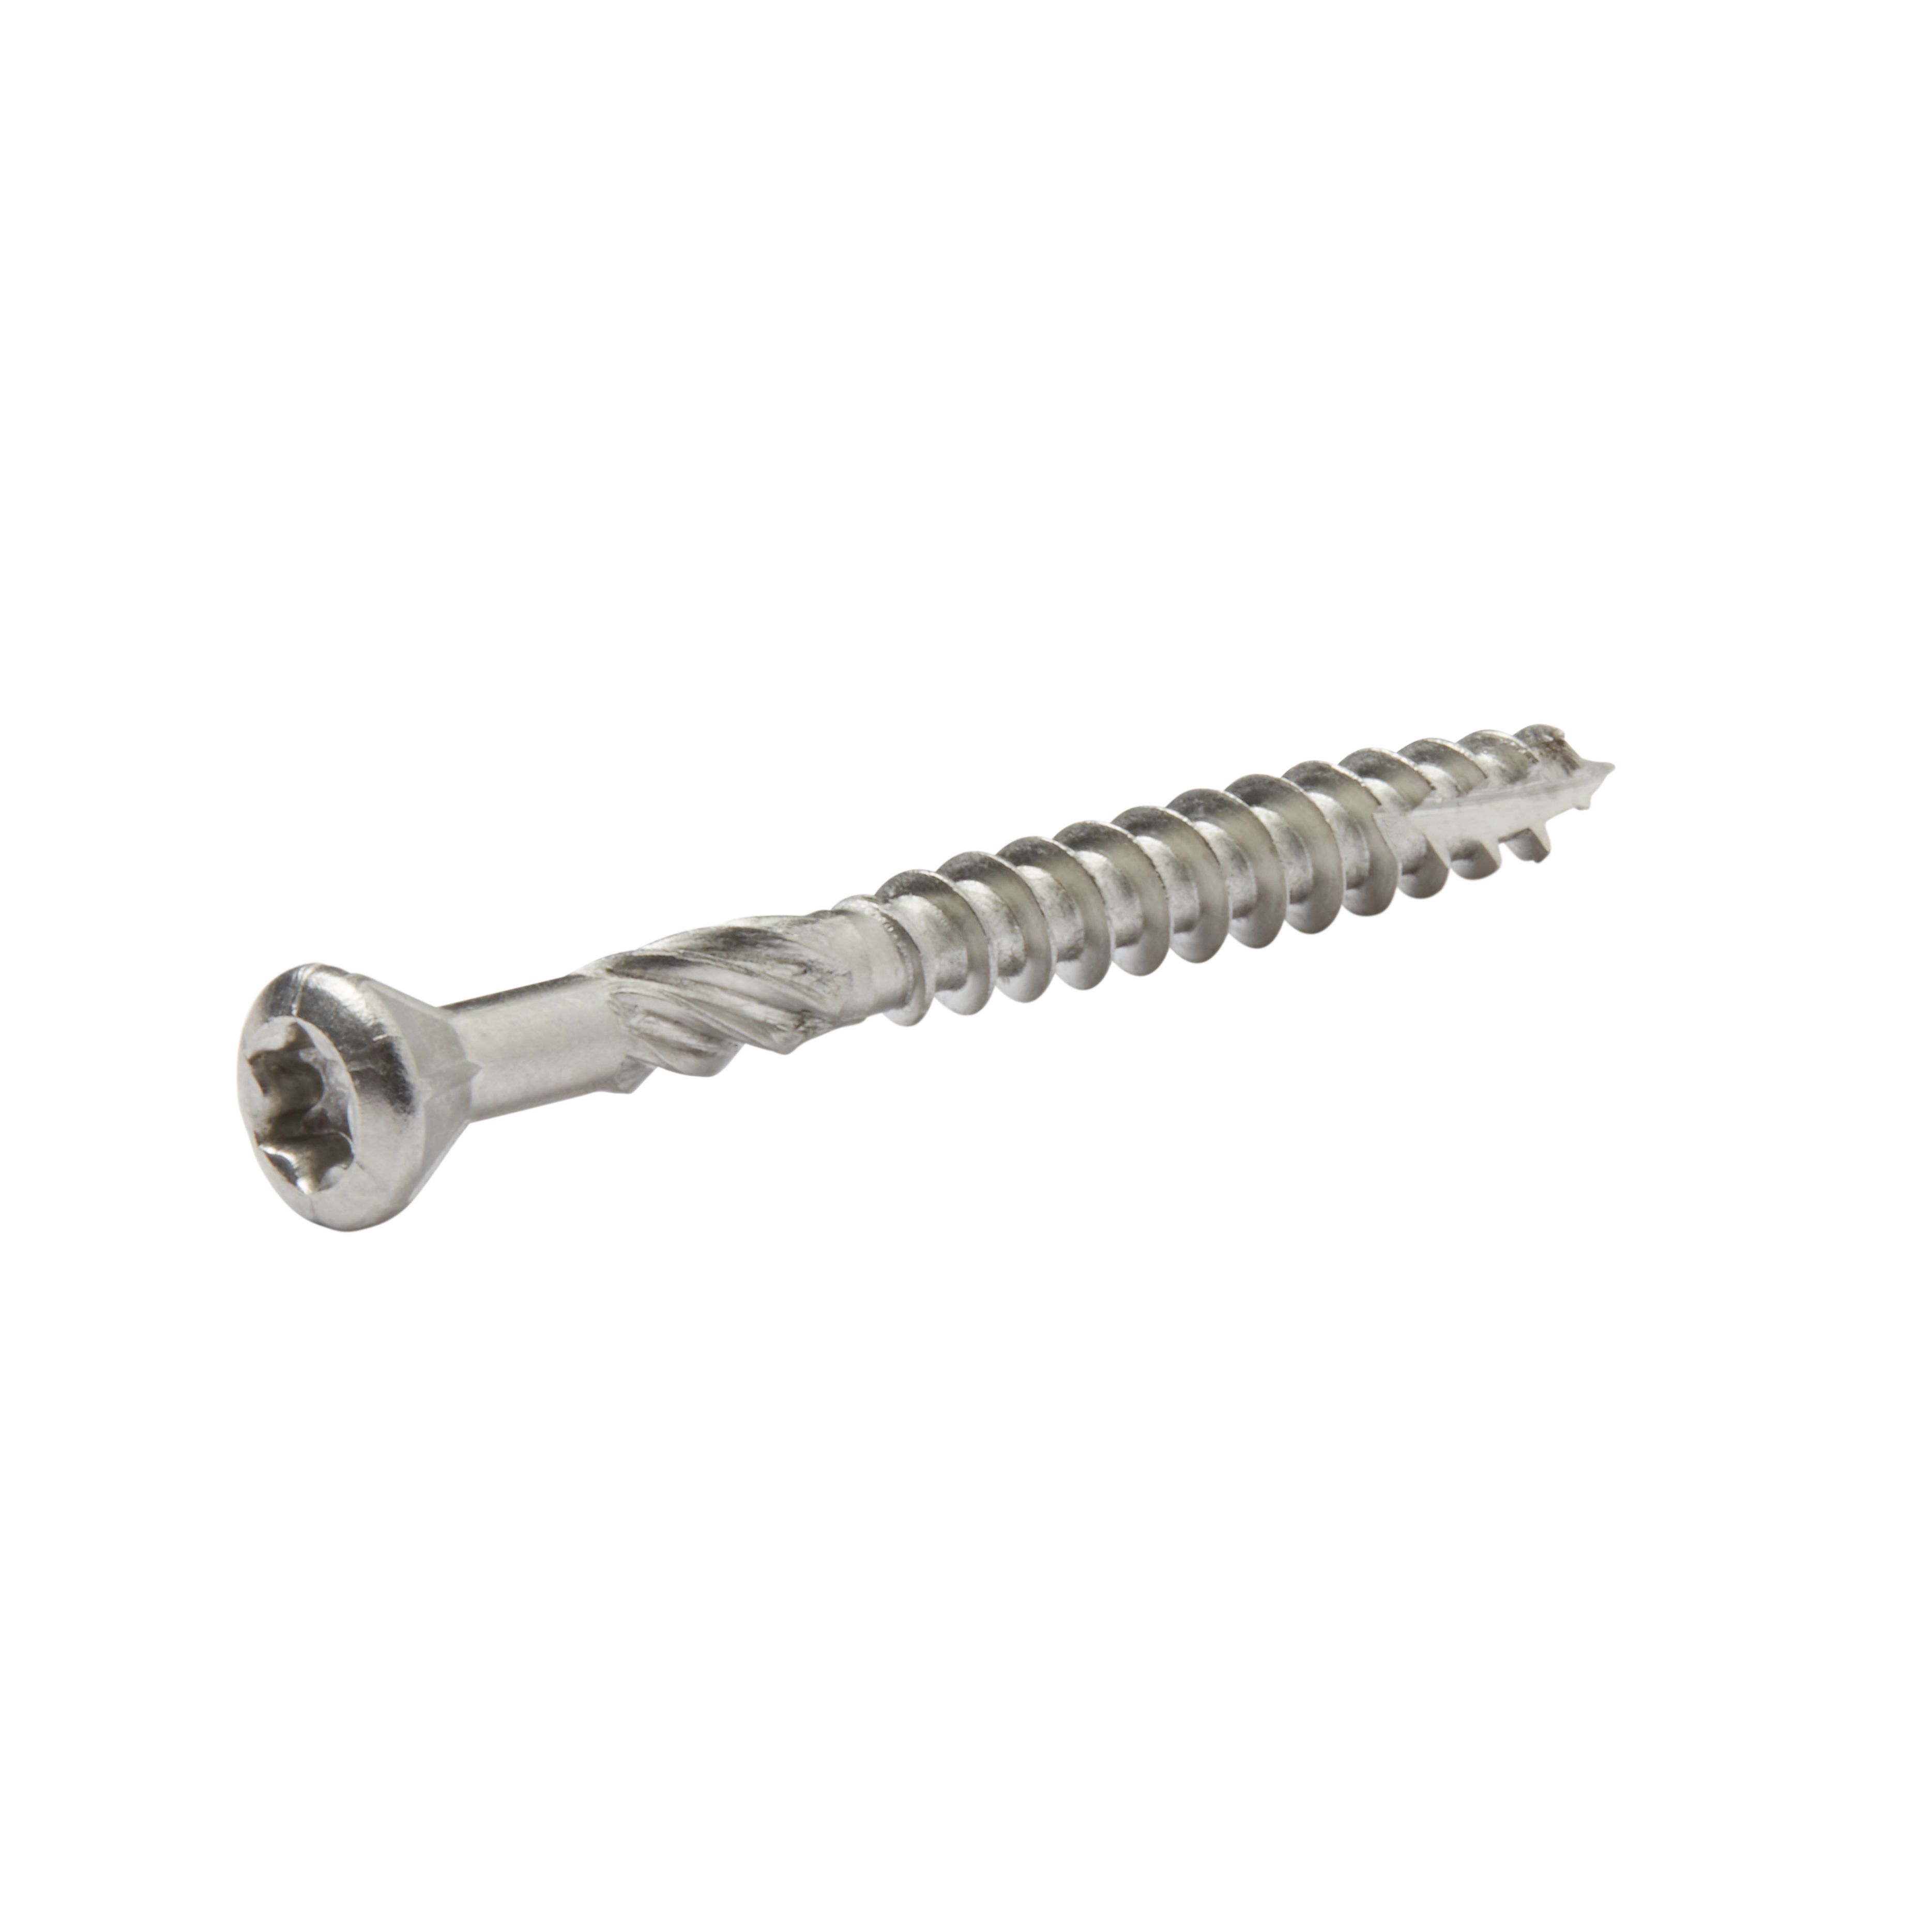 TurboDrive TX Stainless steel Decking Multipurpose screw (Dia)5mm (L)50mm, Pack of 250